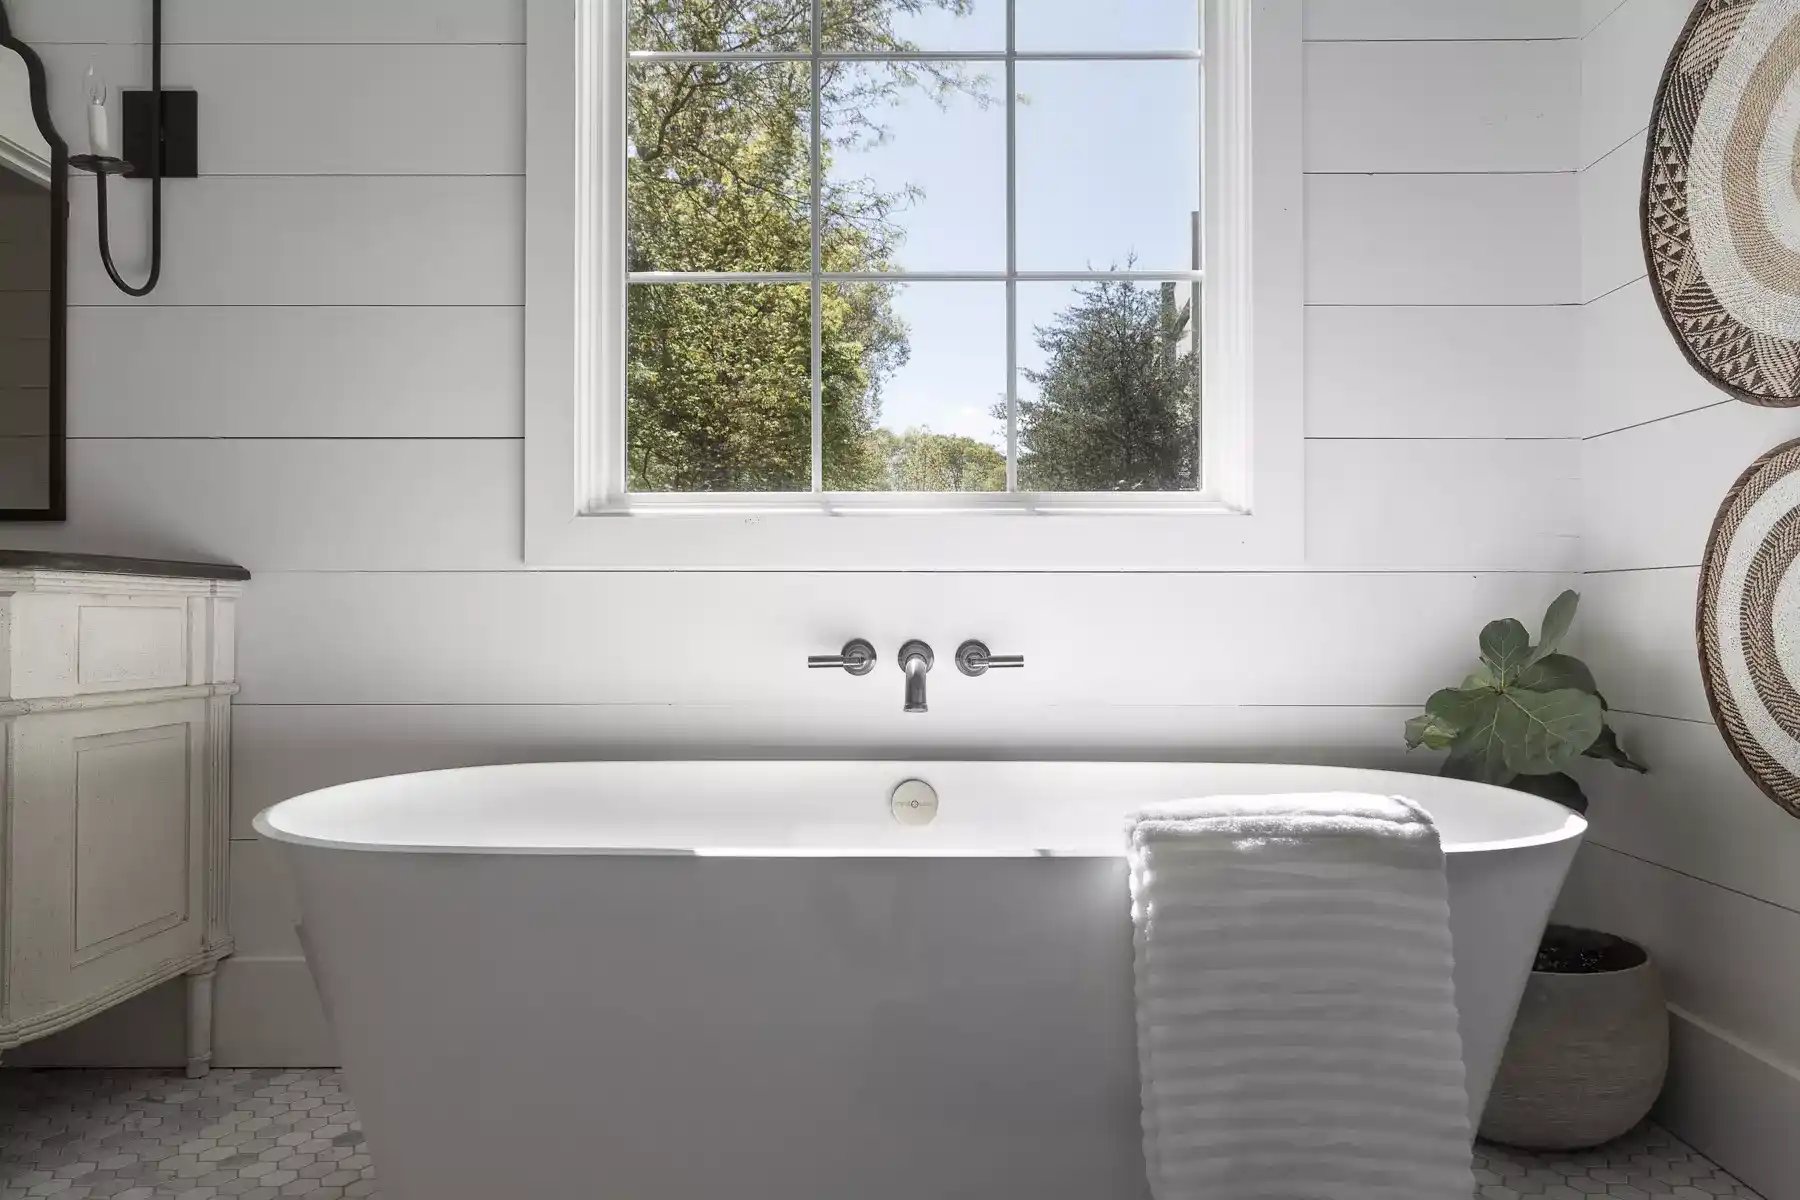 Bright traditional bathroom with clawfoot tub and farmhouse sink.